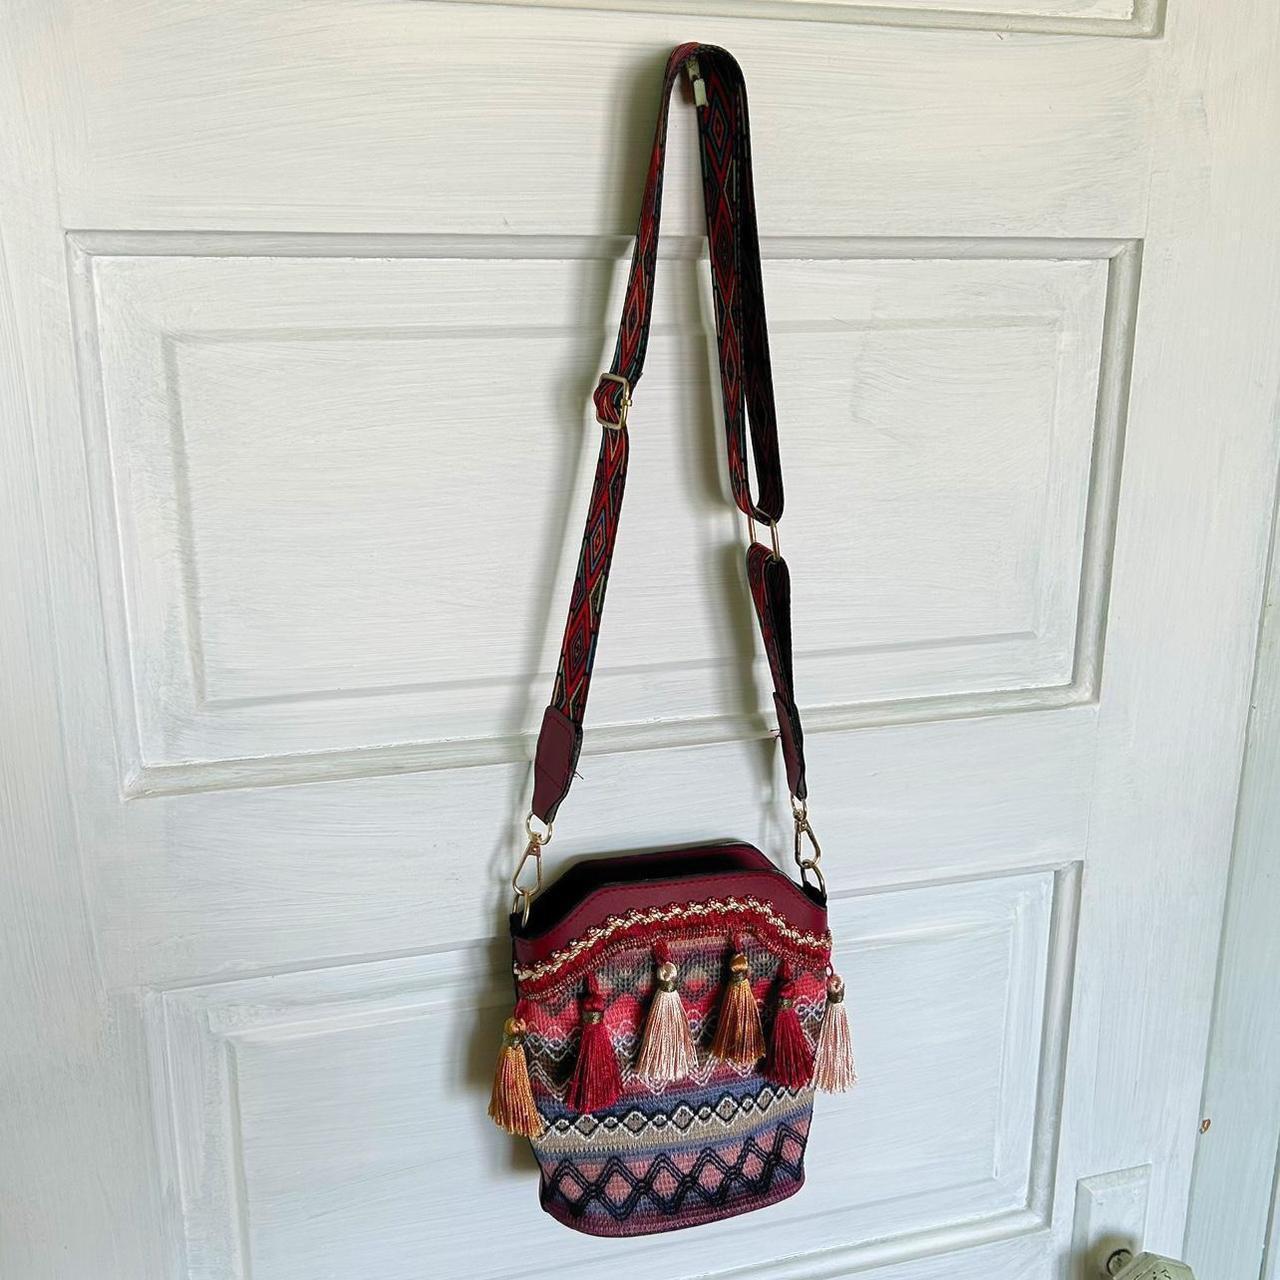 Boho Vintage Clutch Bag With A Colourful Tassels